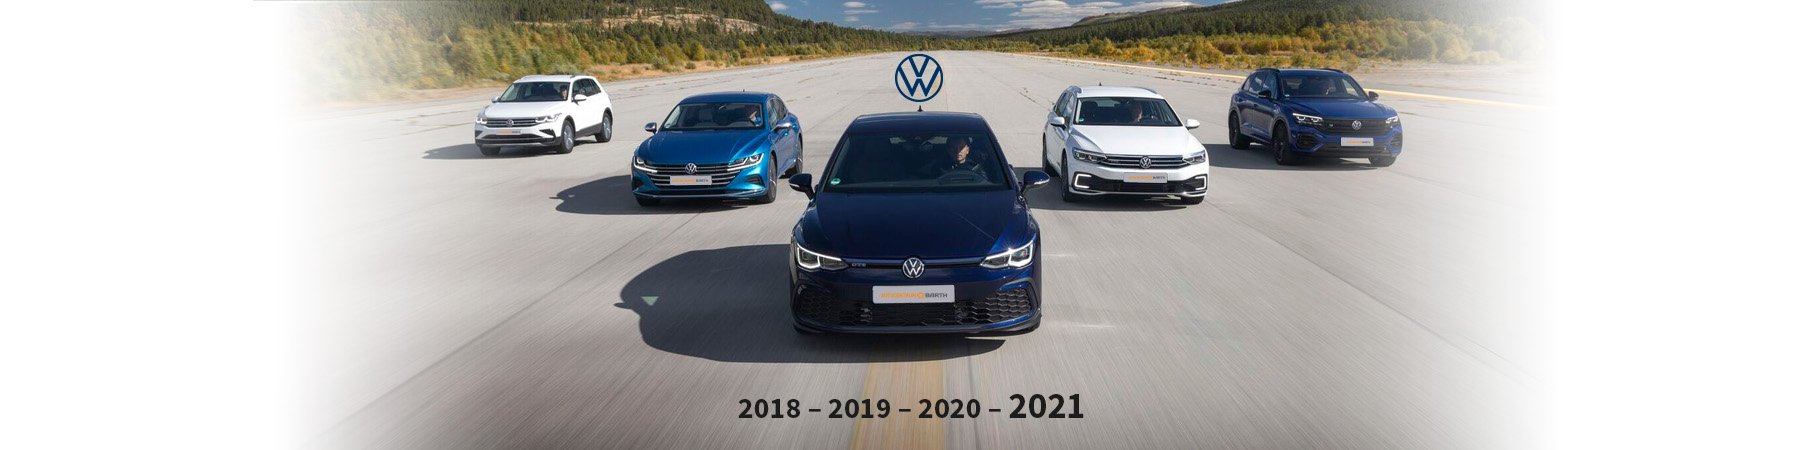 Nej VW dealer 2021